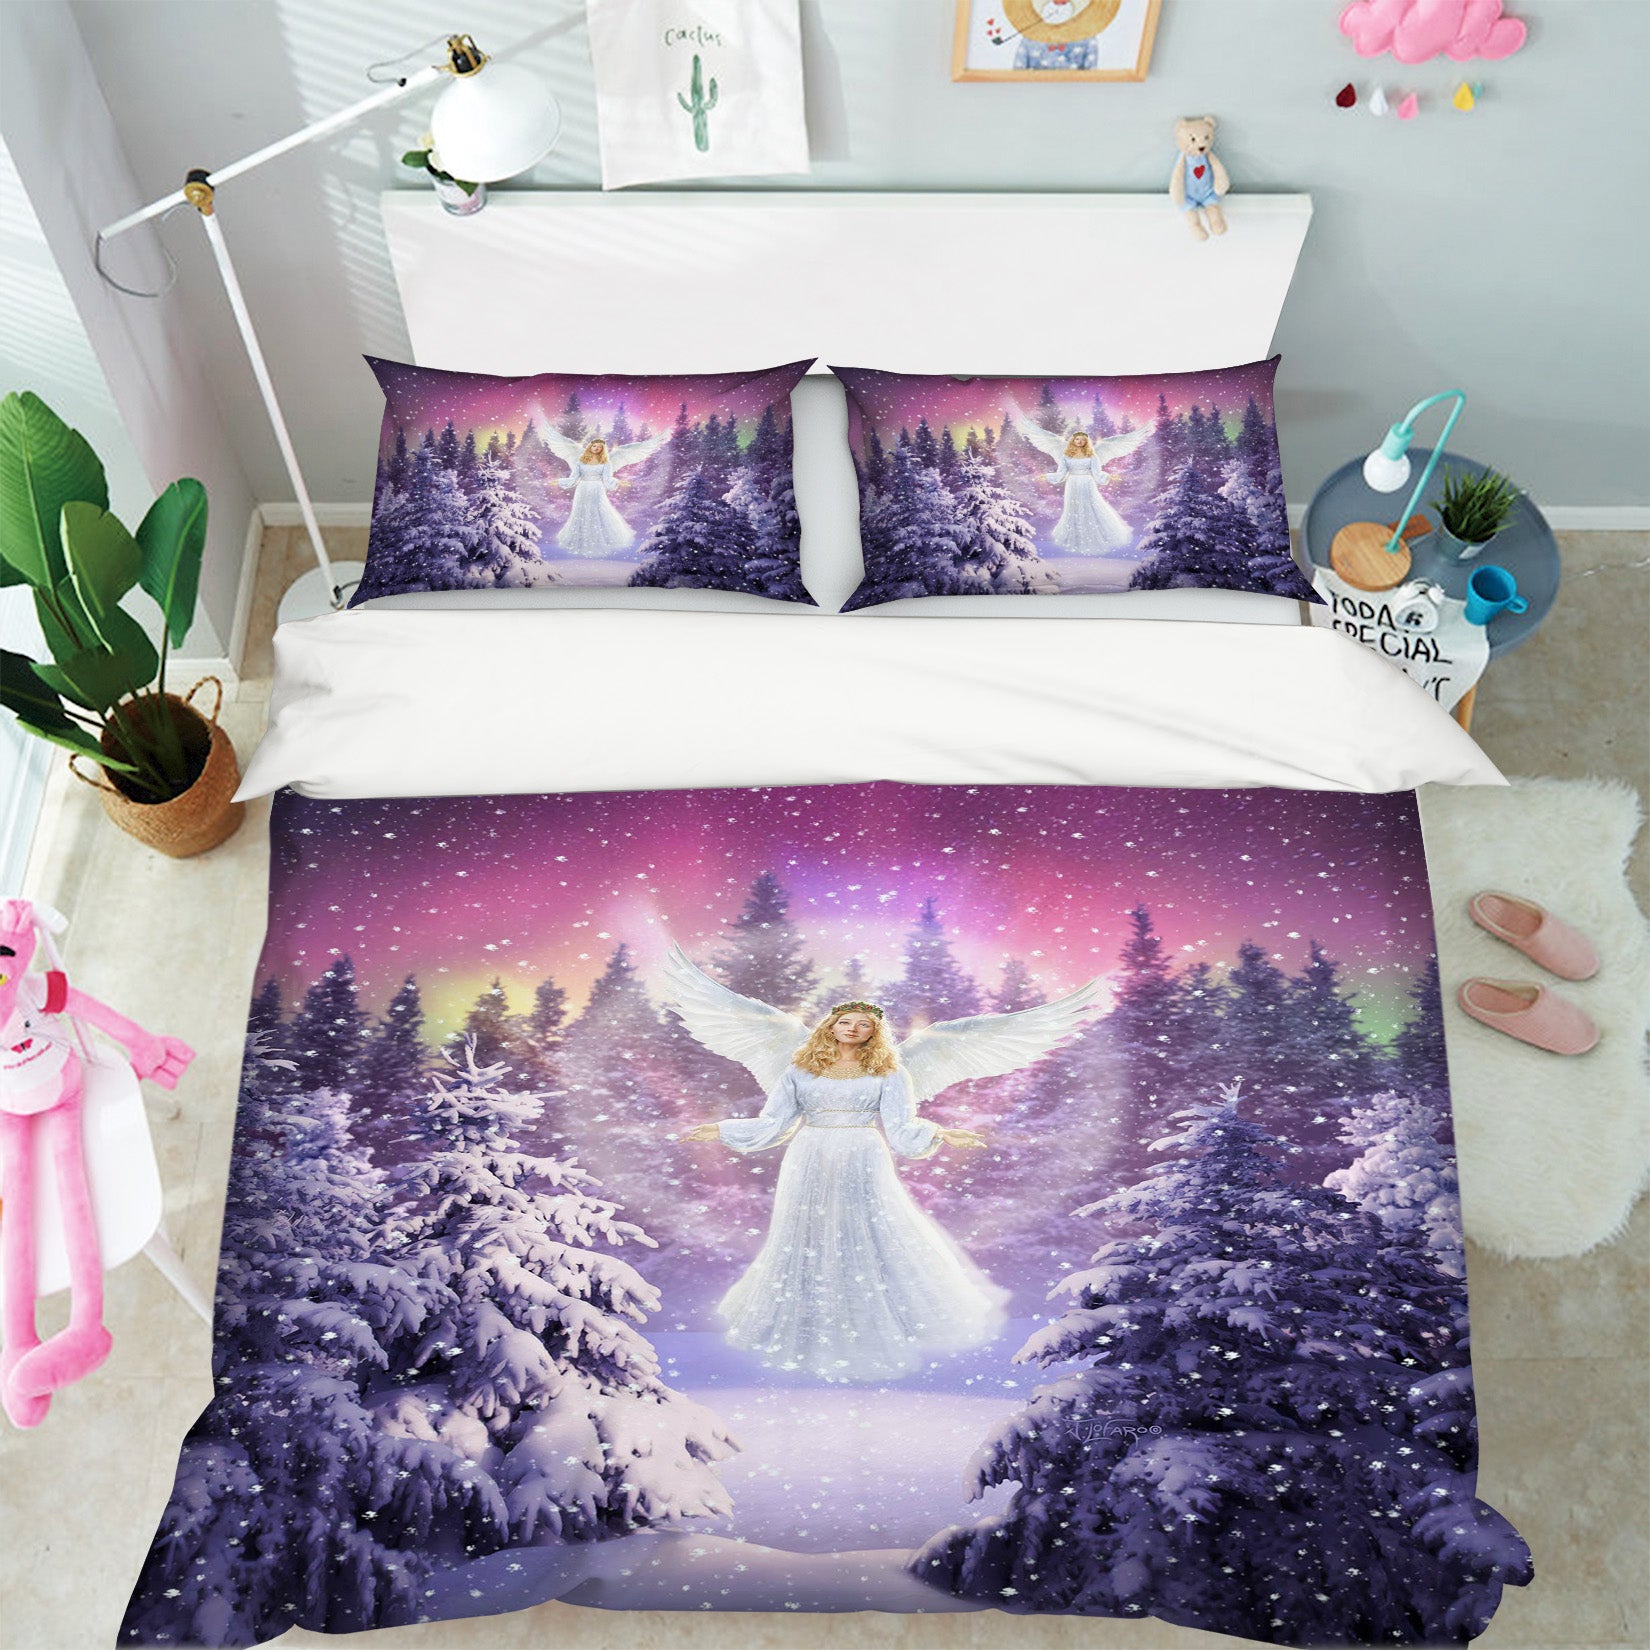 3D Snow Angel 2132 Jerry LoFaro bedding Bed Pillowcases Quilt